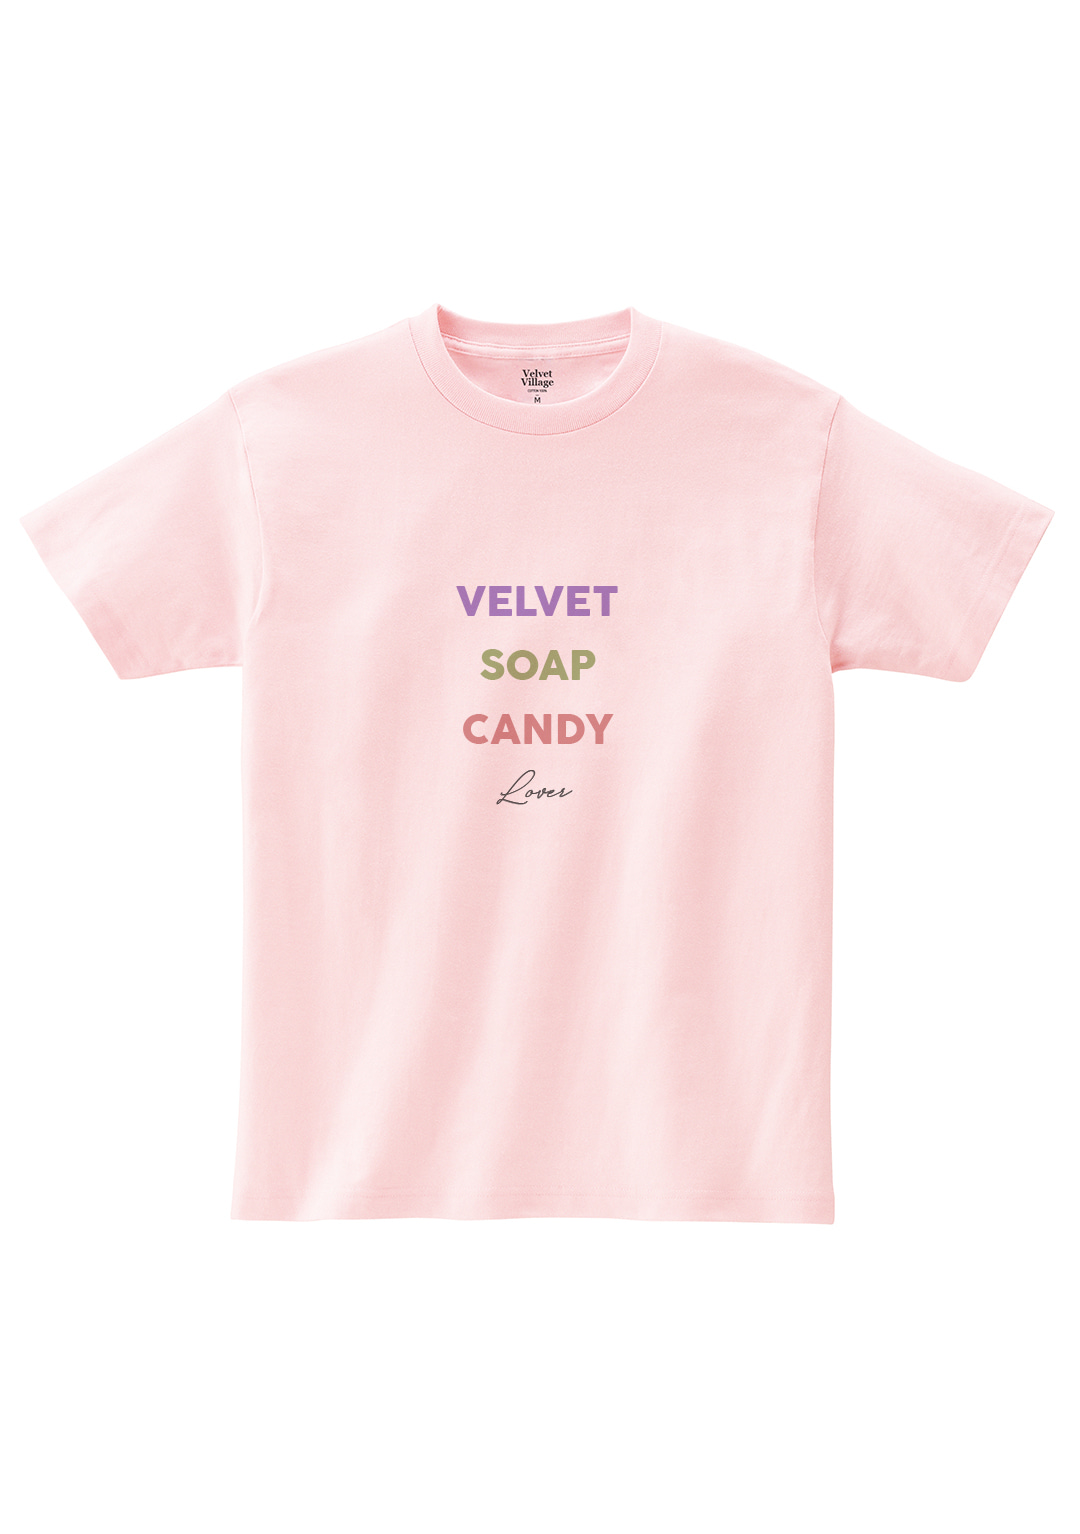 Velvet soap candy T-shirt (Baby Pink)